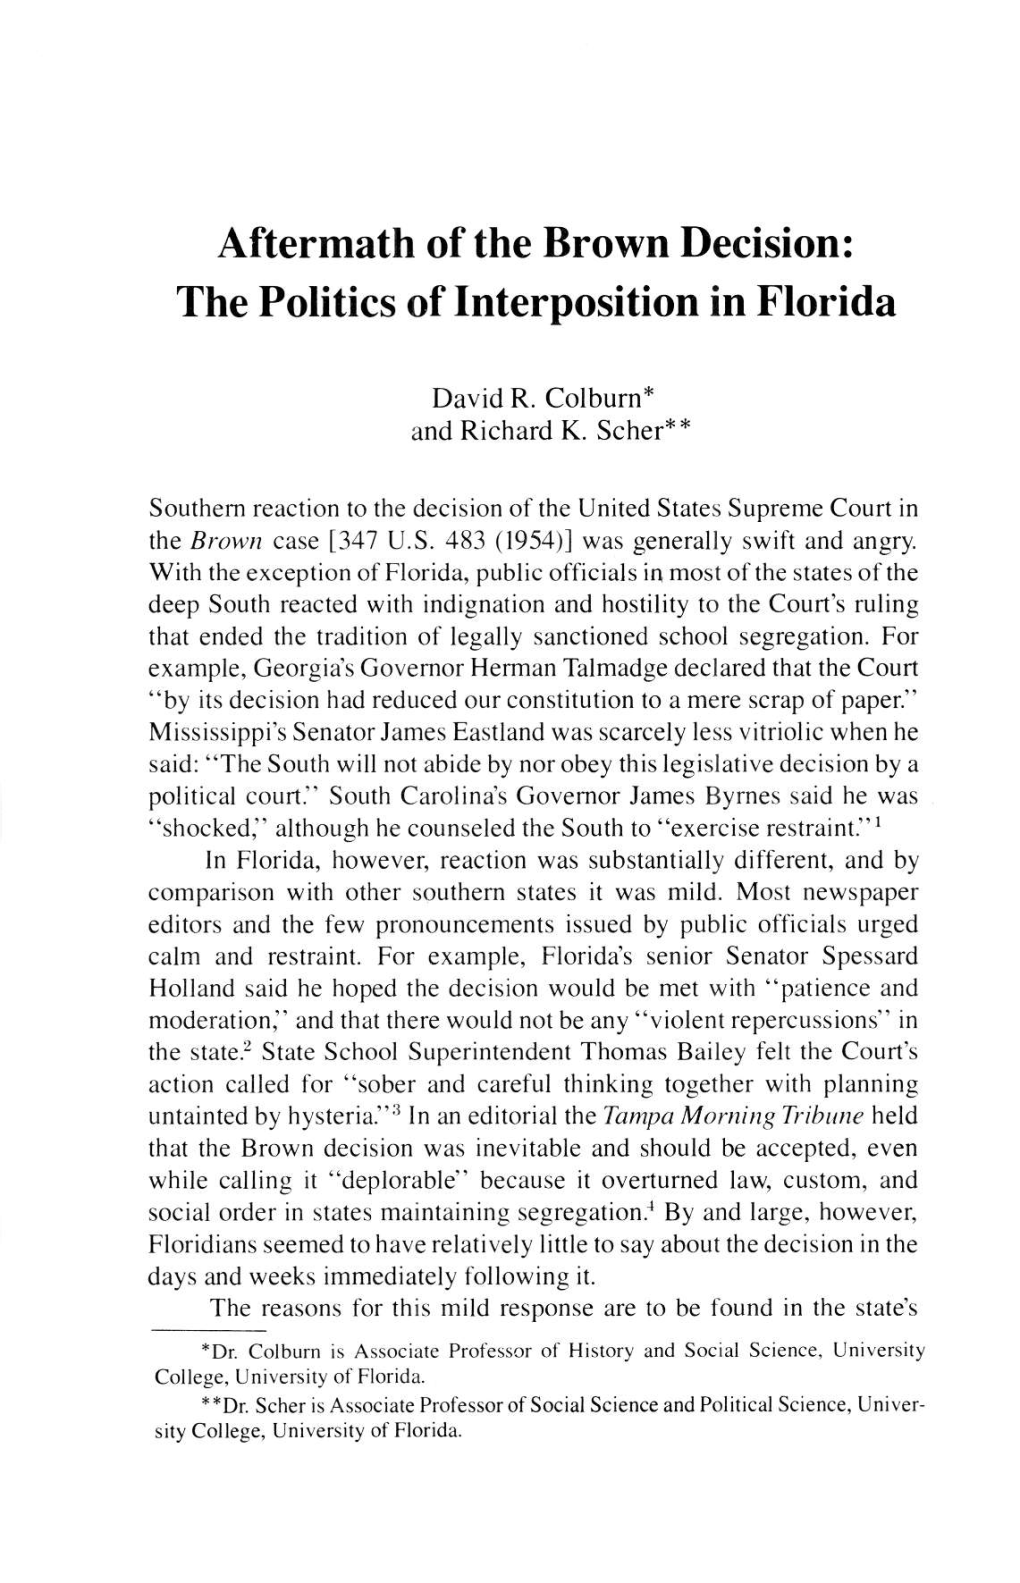 The Politics of Interposition in Florida